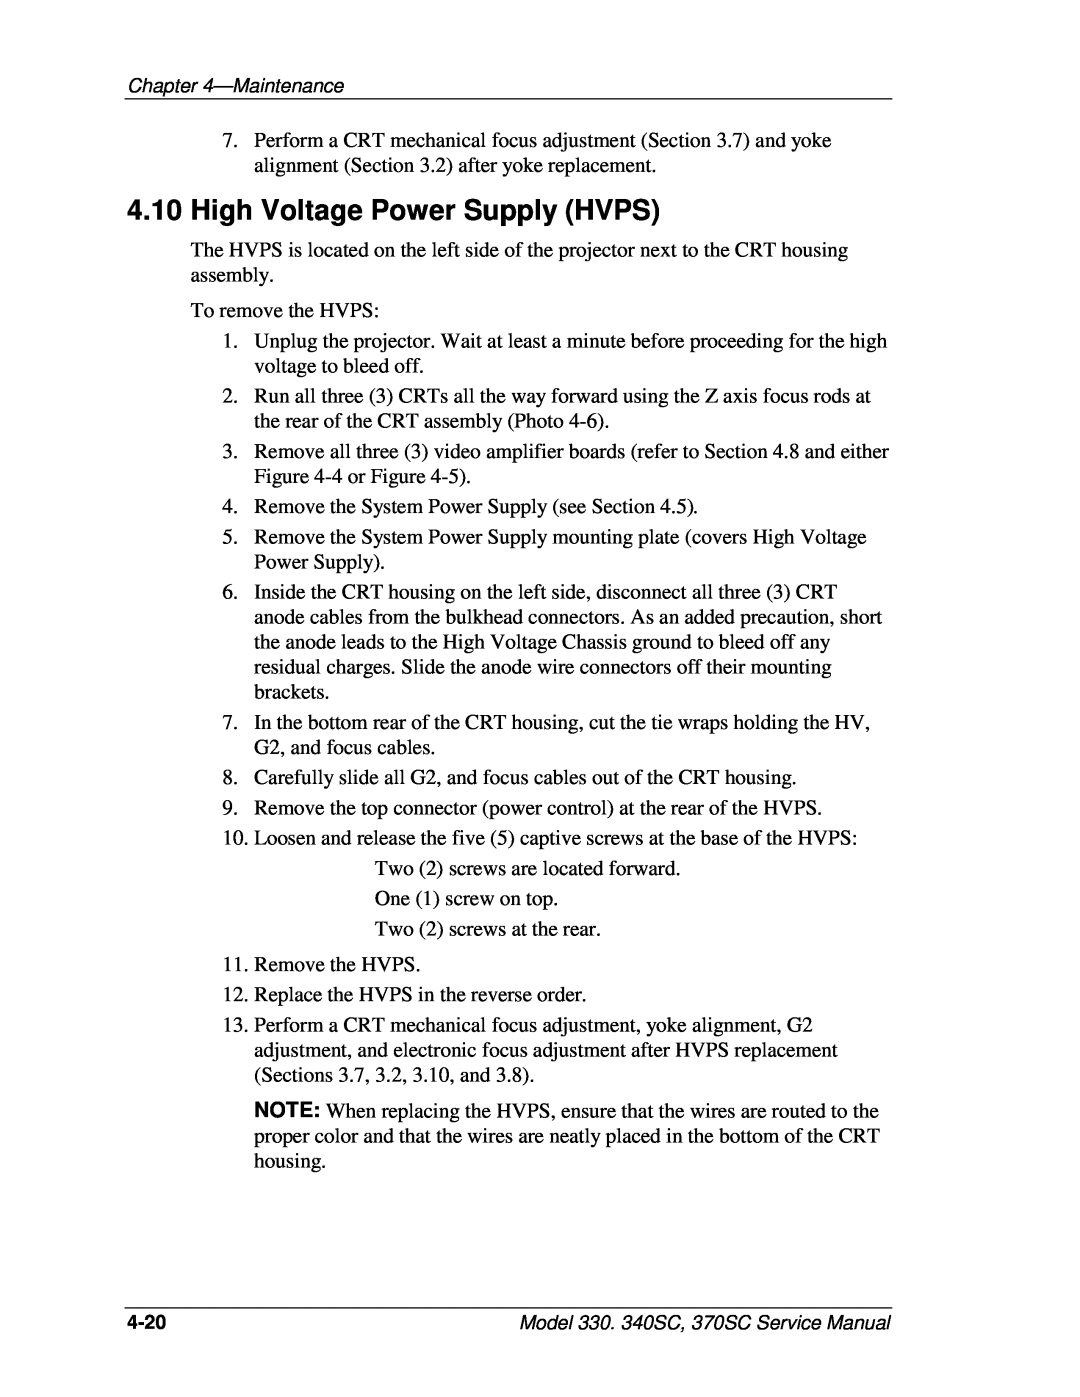 JVC 370 SC, 330, 340 SC service manual High Voltage Power Supply HVPS 